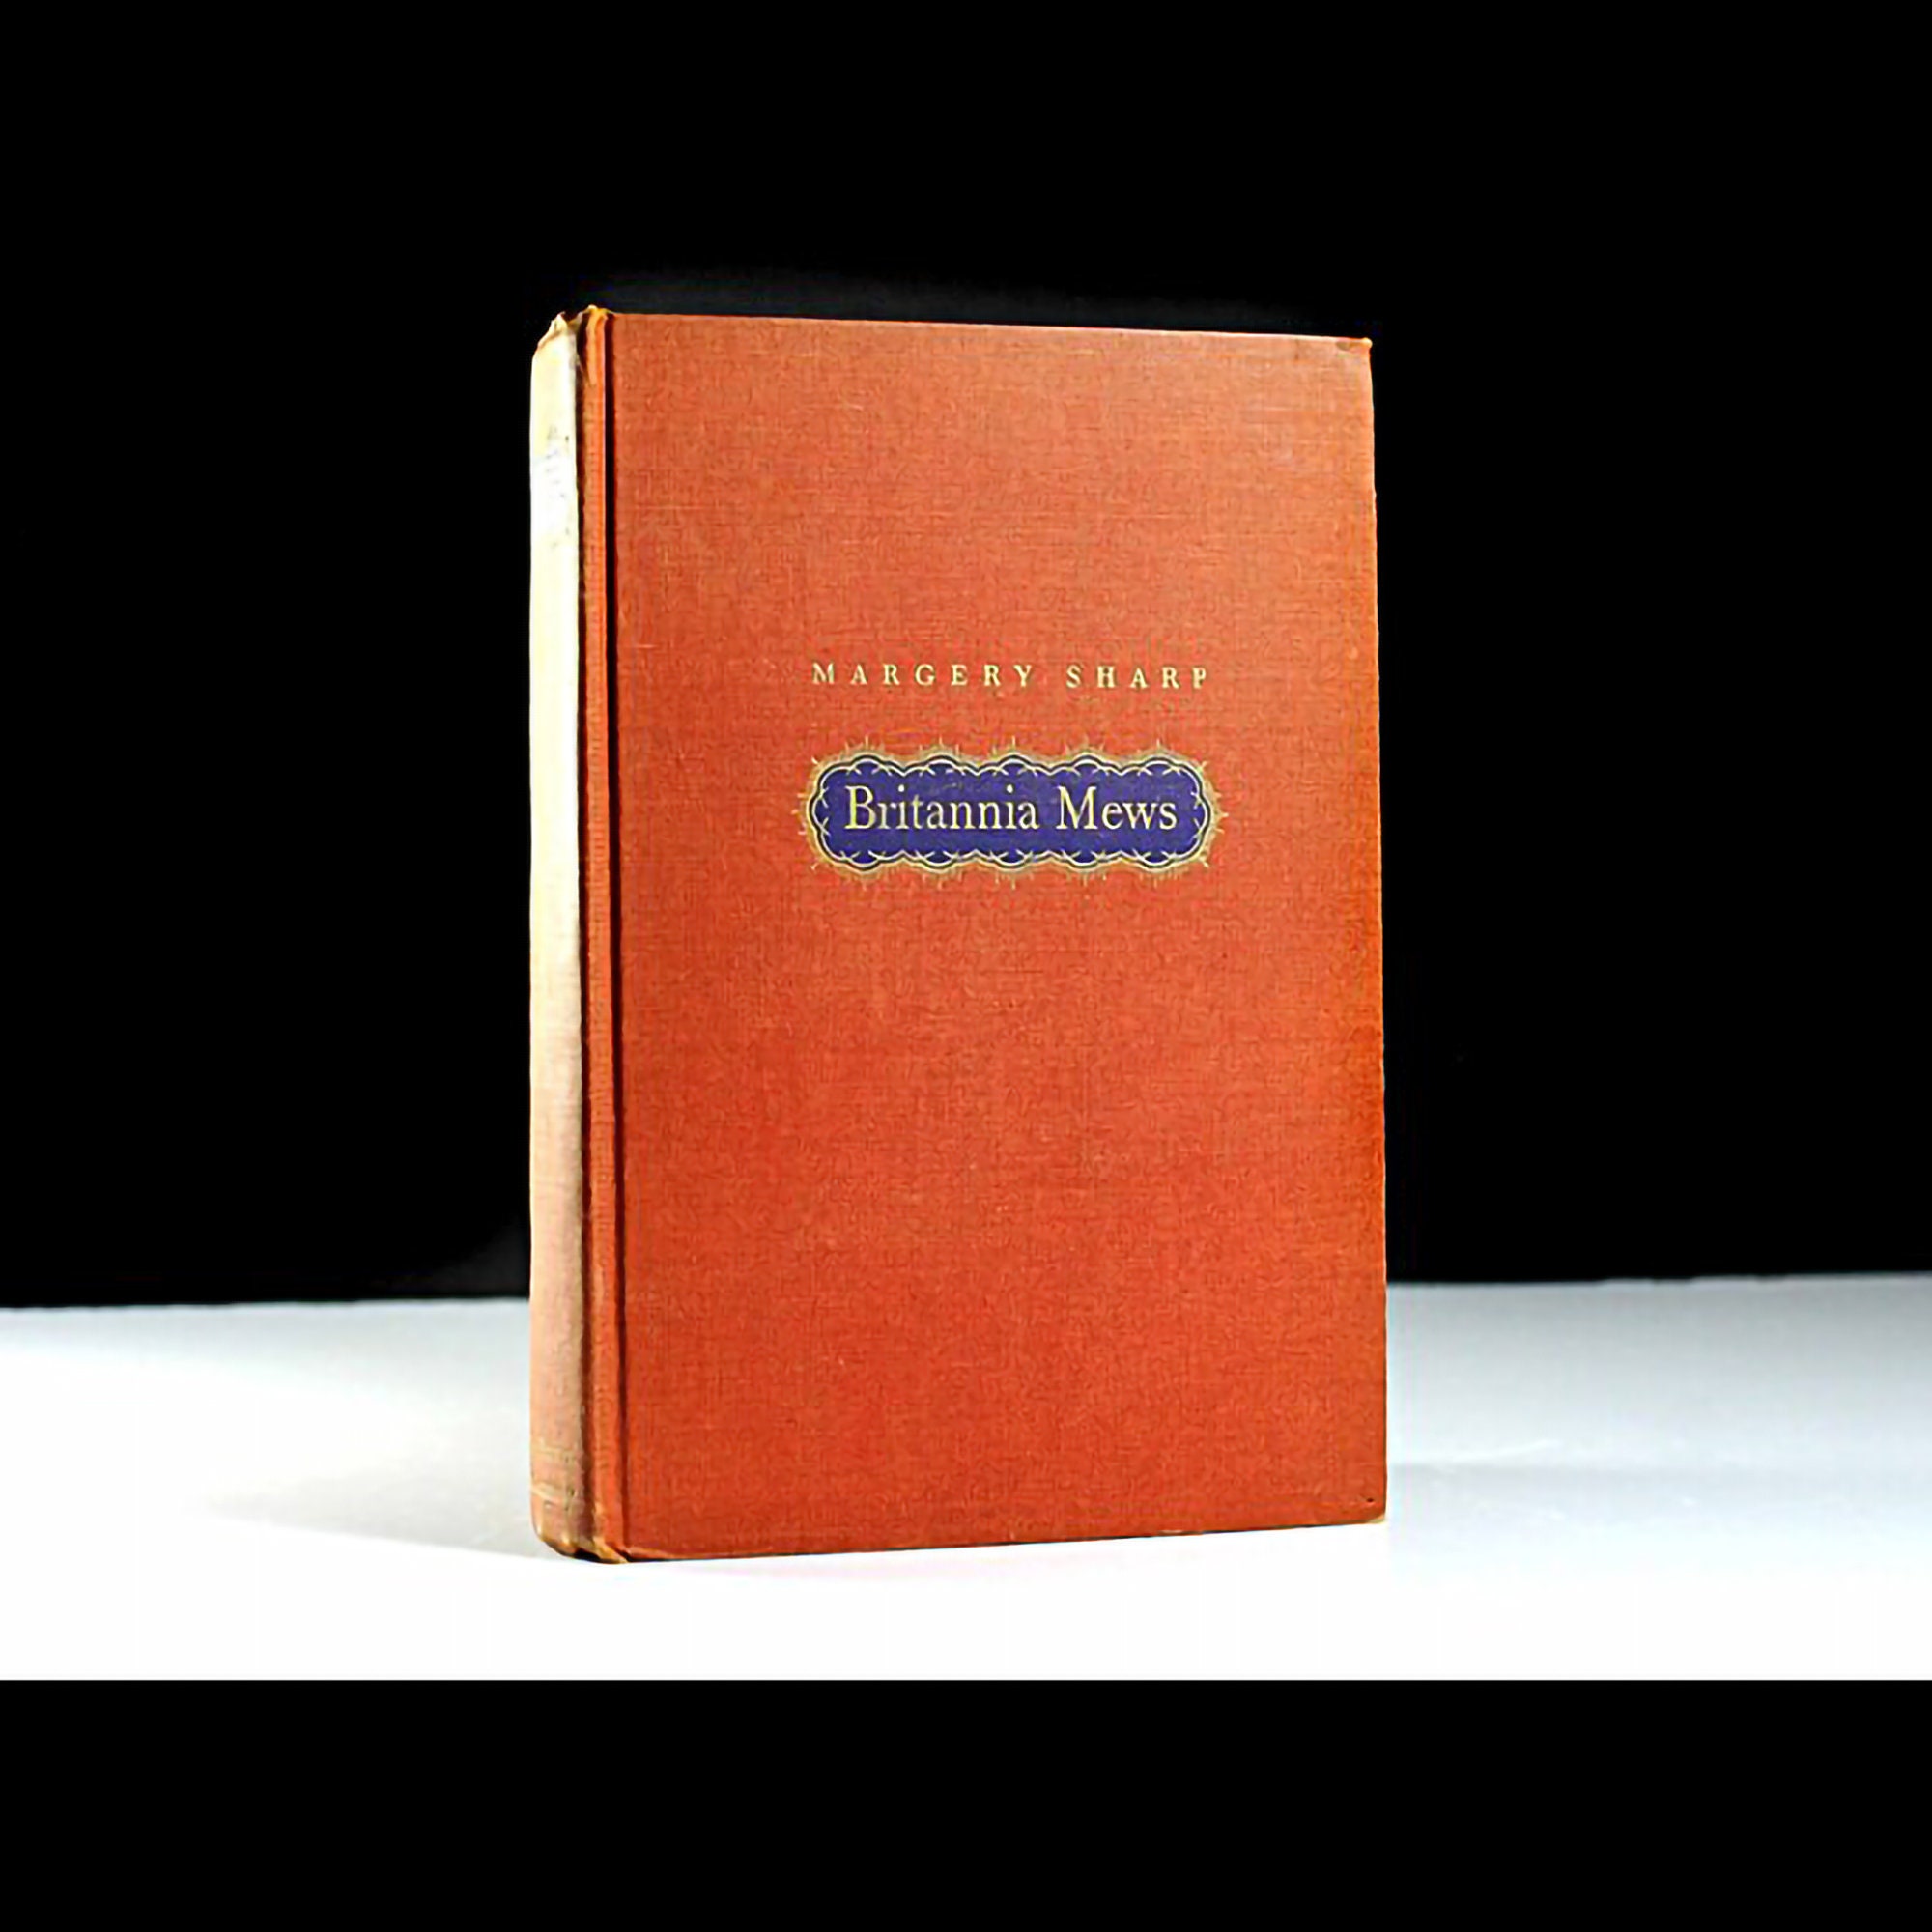 1946 Hardcover Book, Britannia Mews, Margery Sharp, First Edition